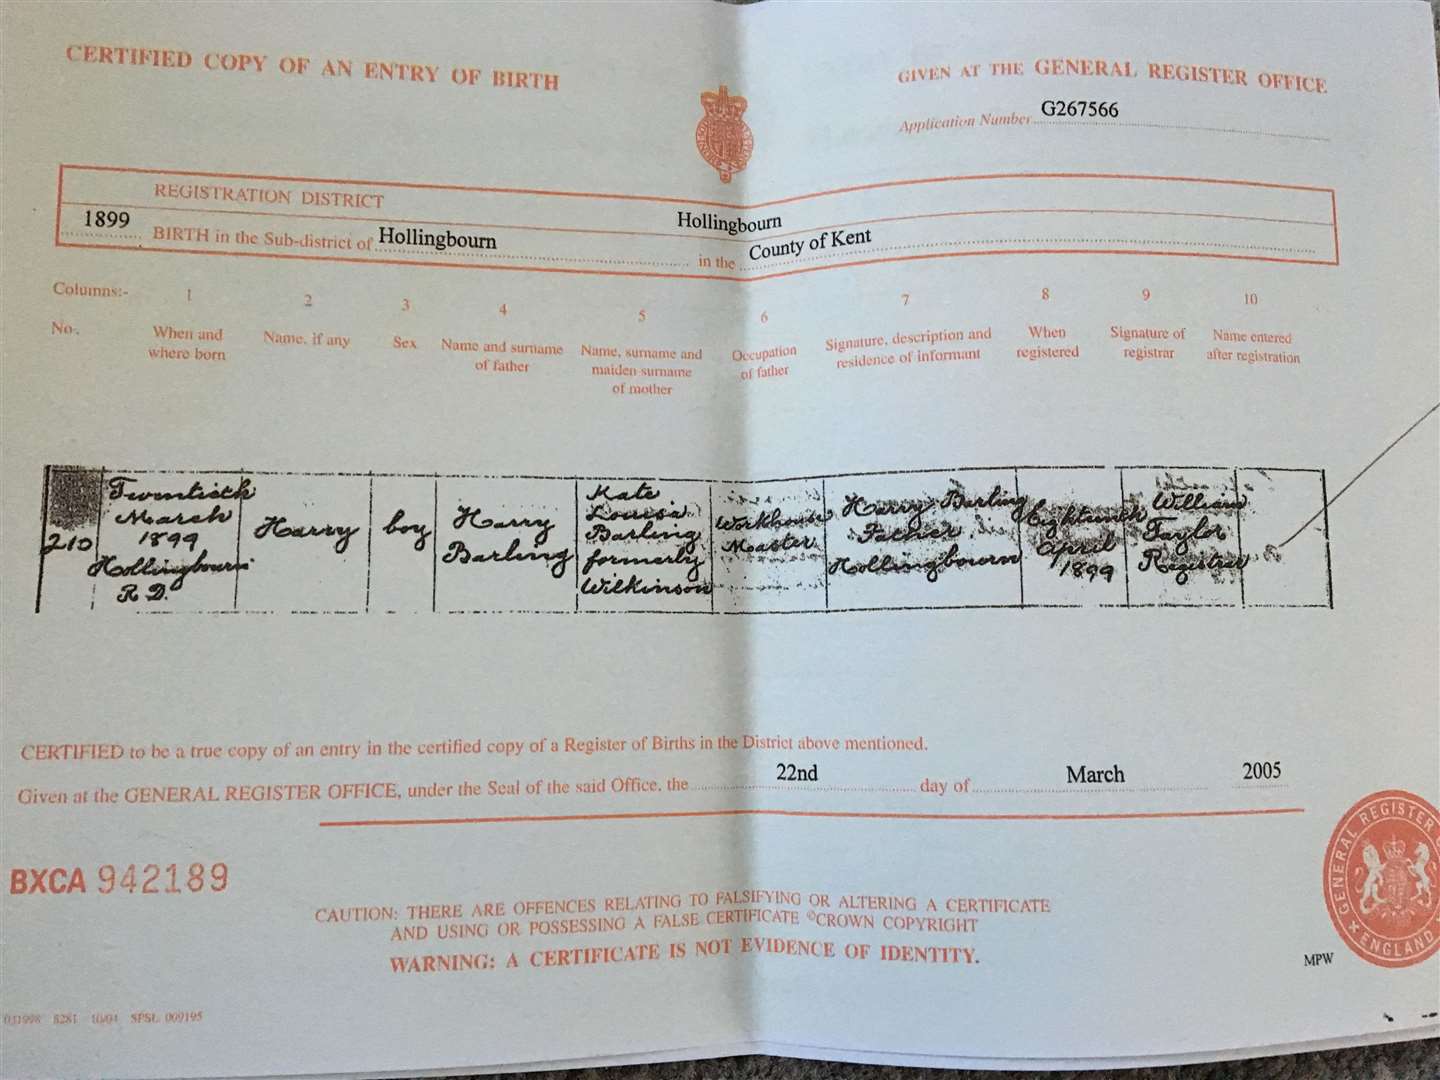 Harry Barling's birth certificate